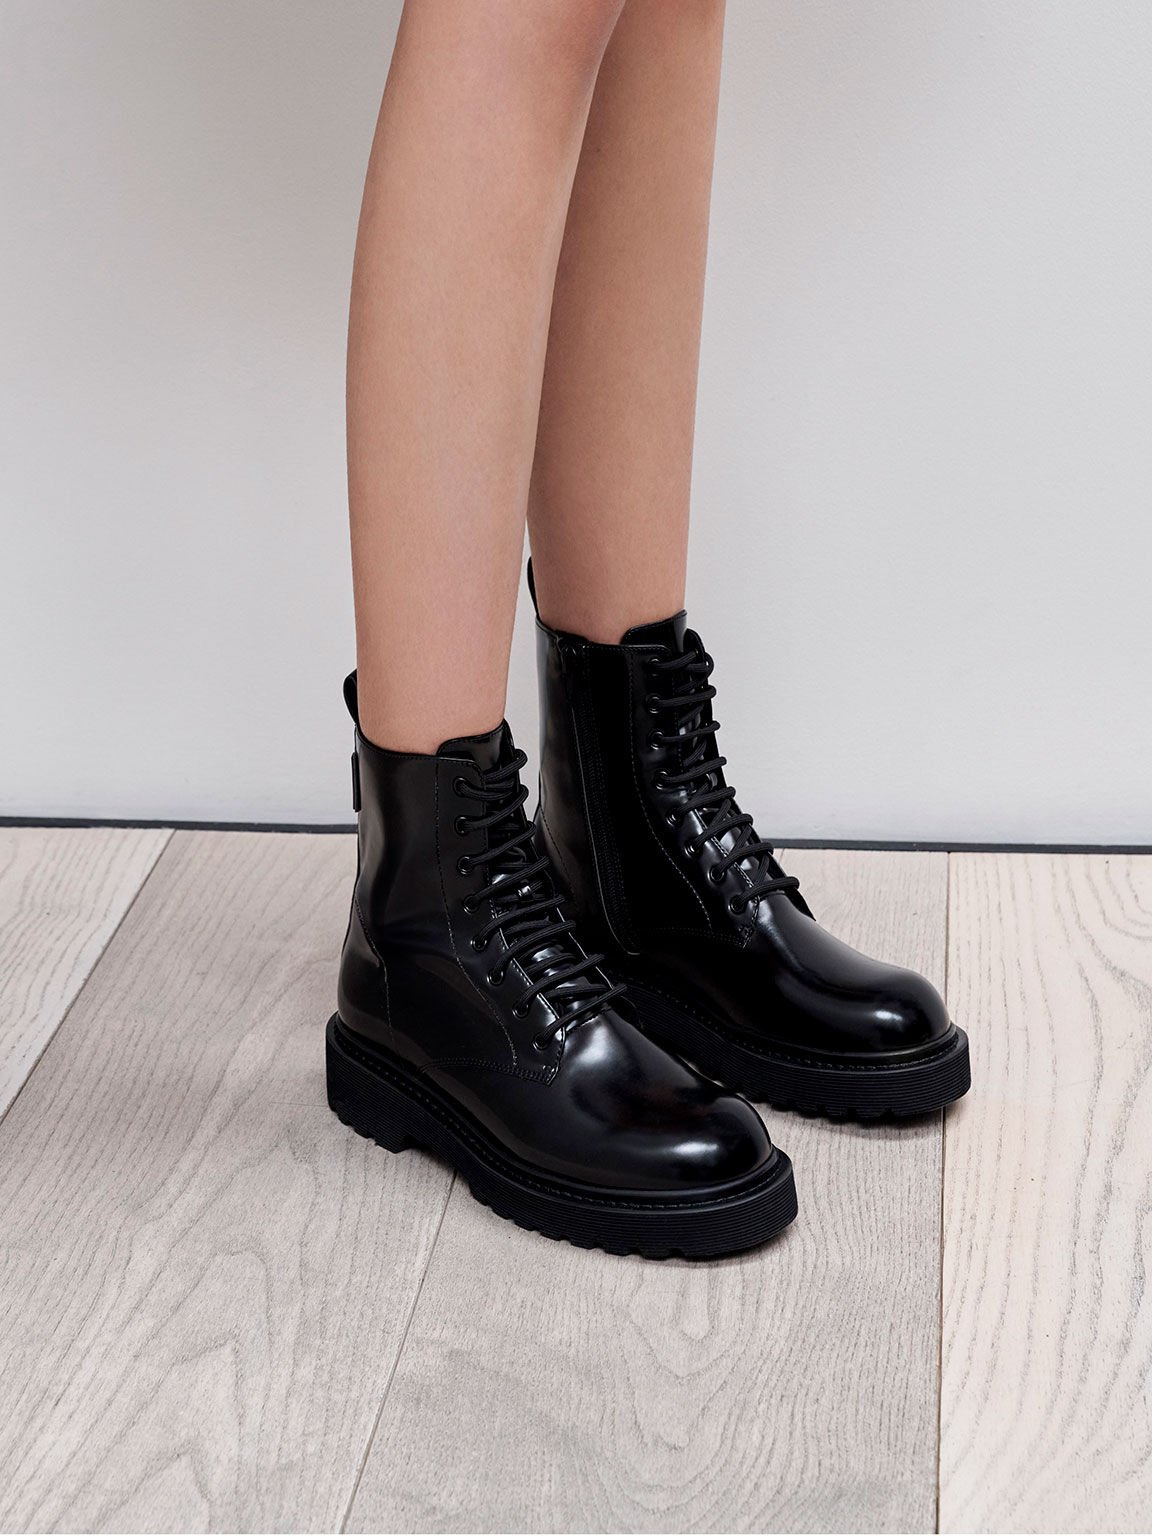 Pix lace-up ankle boots